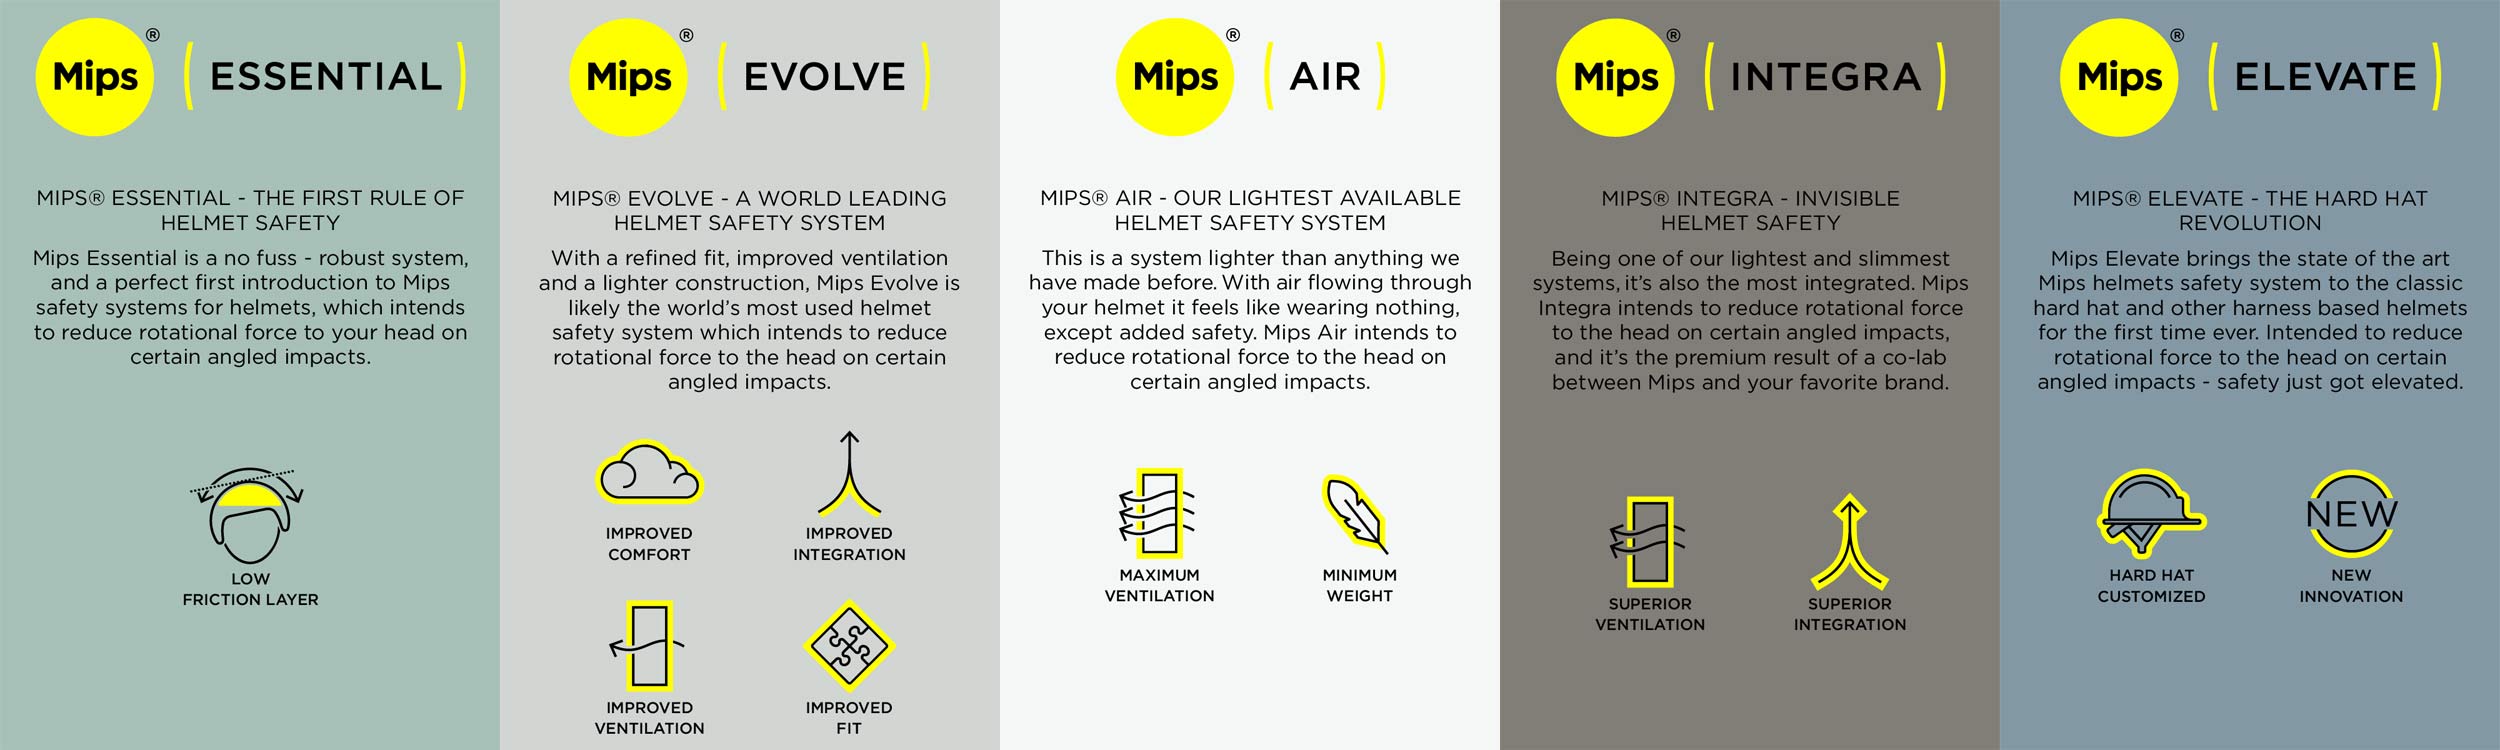 MIPS Essential Evolve Air Integra Elevate helmet protection renaming, rotation-reduction, safer helmets